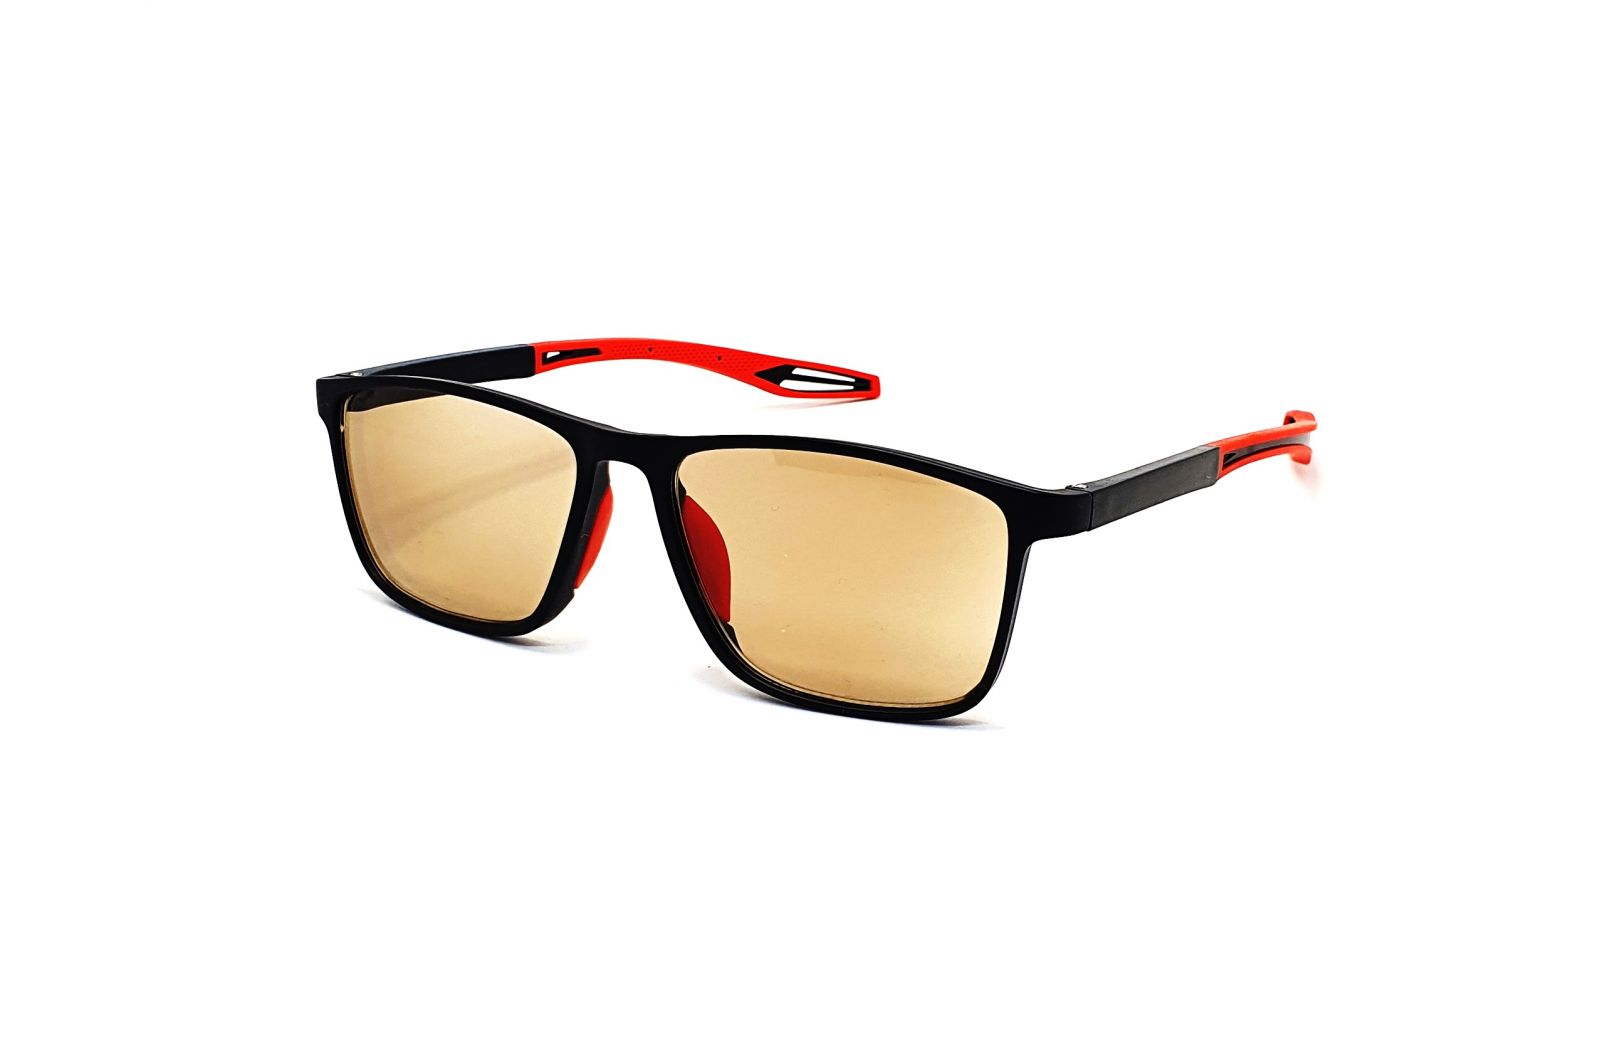 Samozabarvovací dioptrické brýle F04B / -3,00 black/red clear-brown